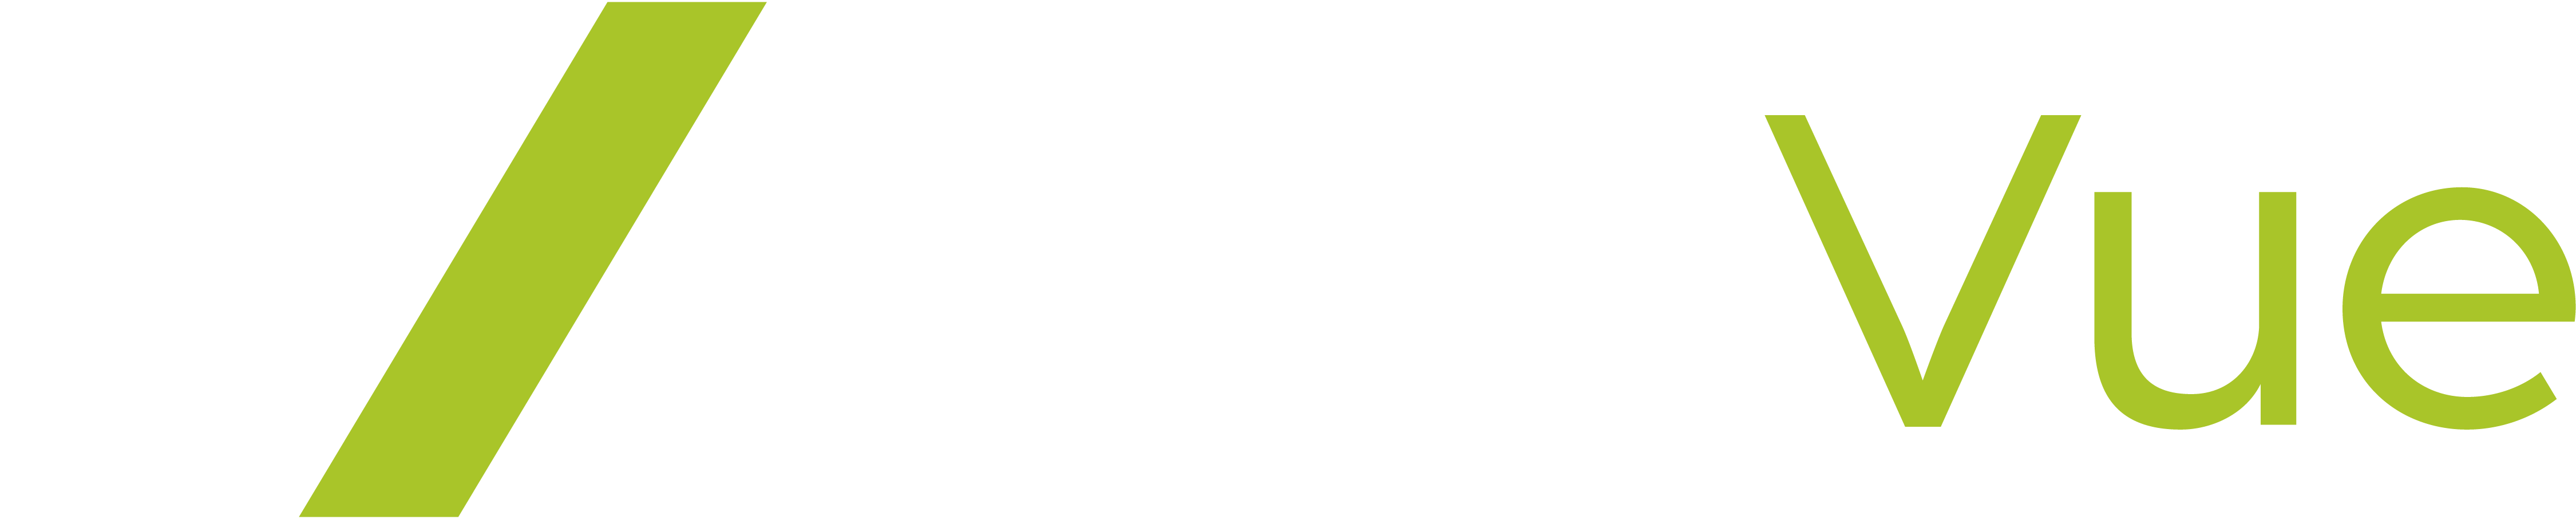 EpicVue Logo Light